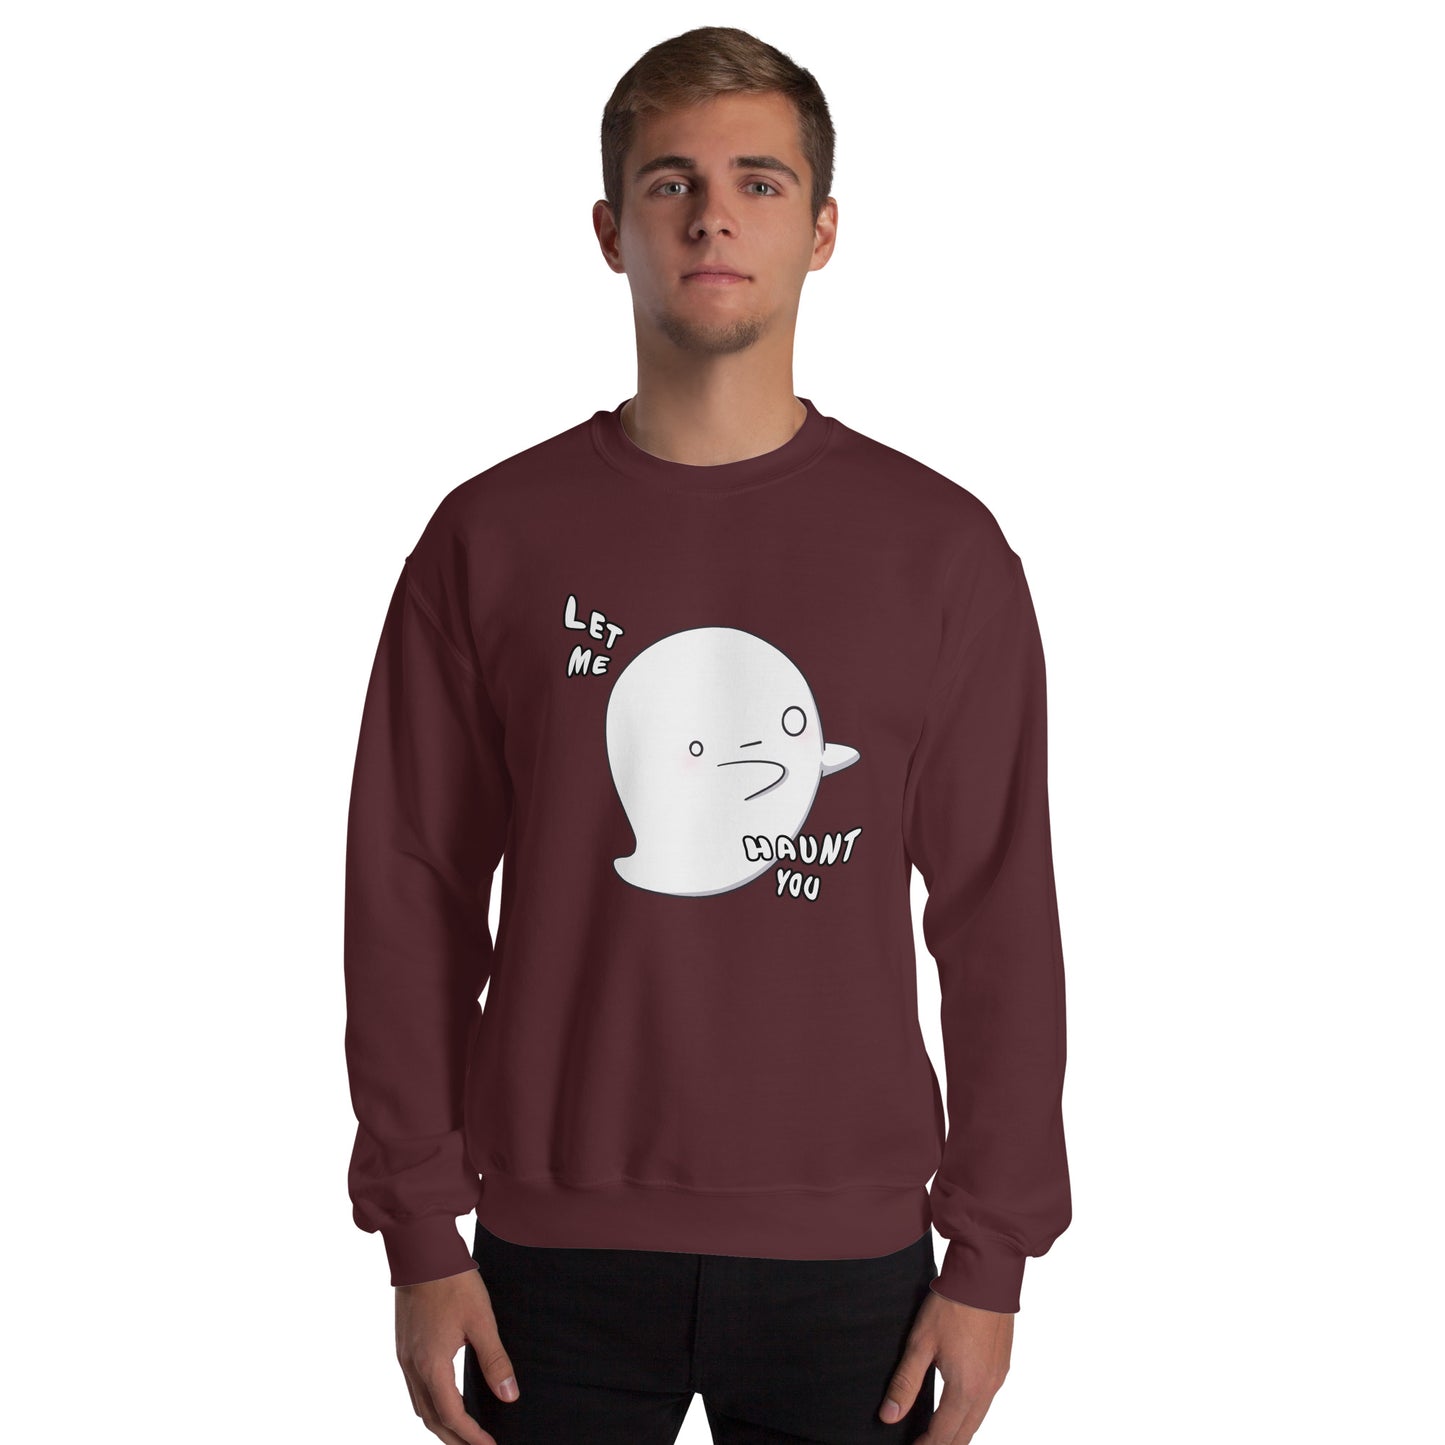 Let me haunt you - Unisex Sweatshirt